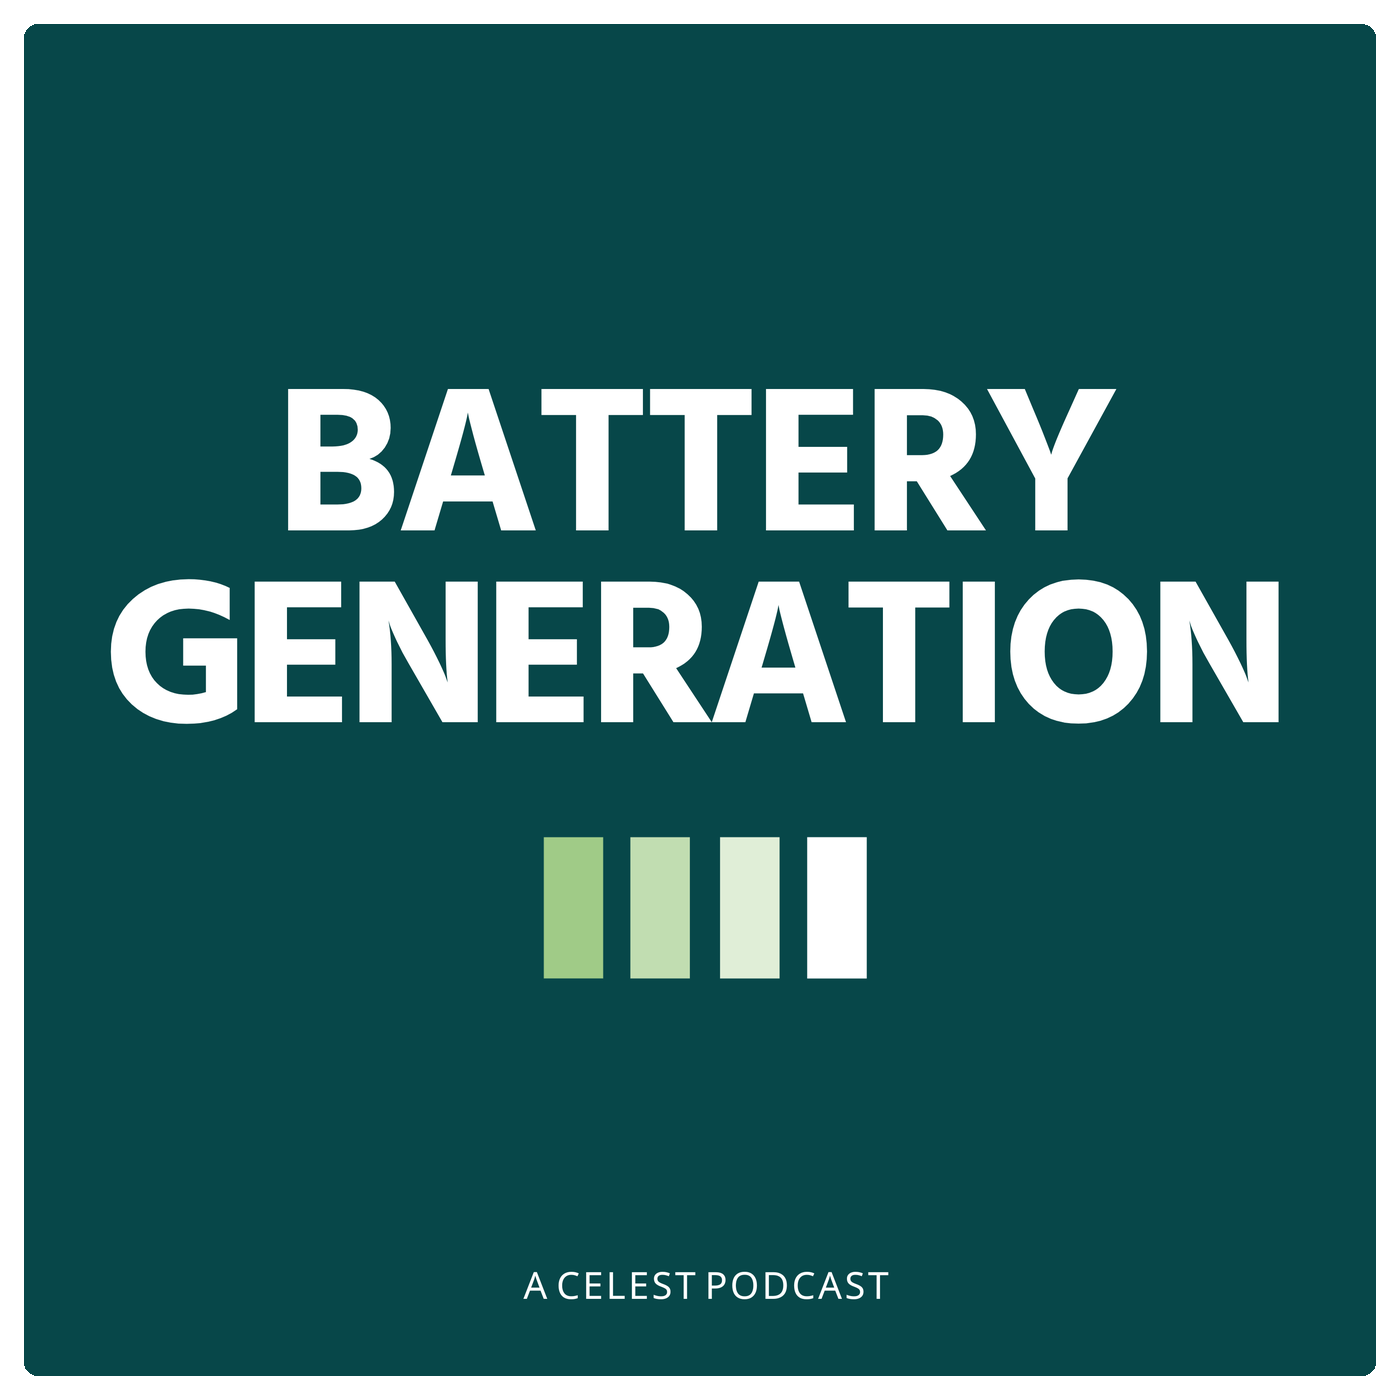 Battery Generation